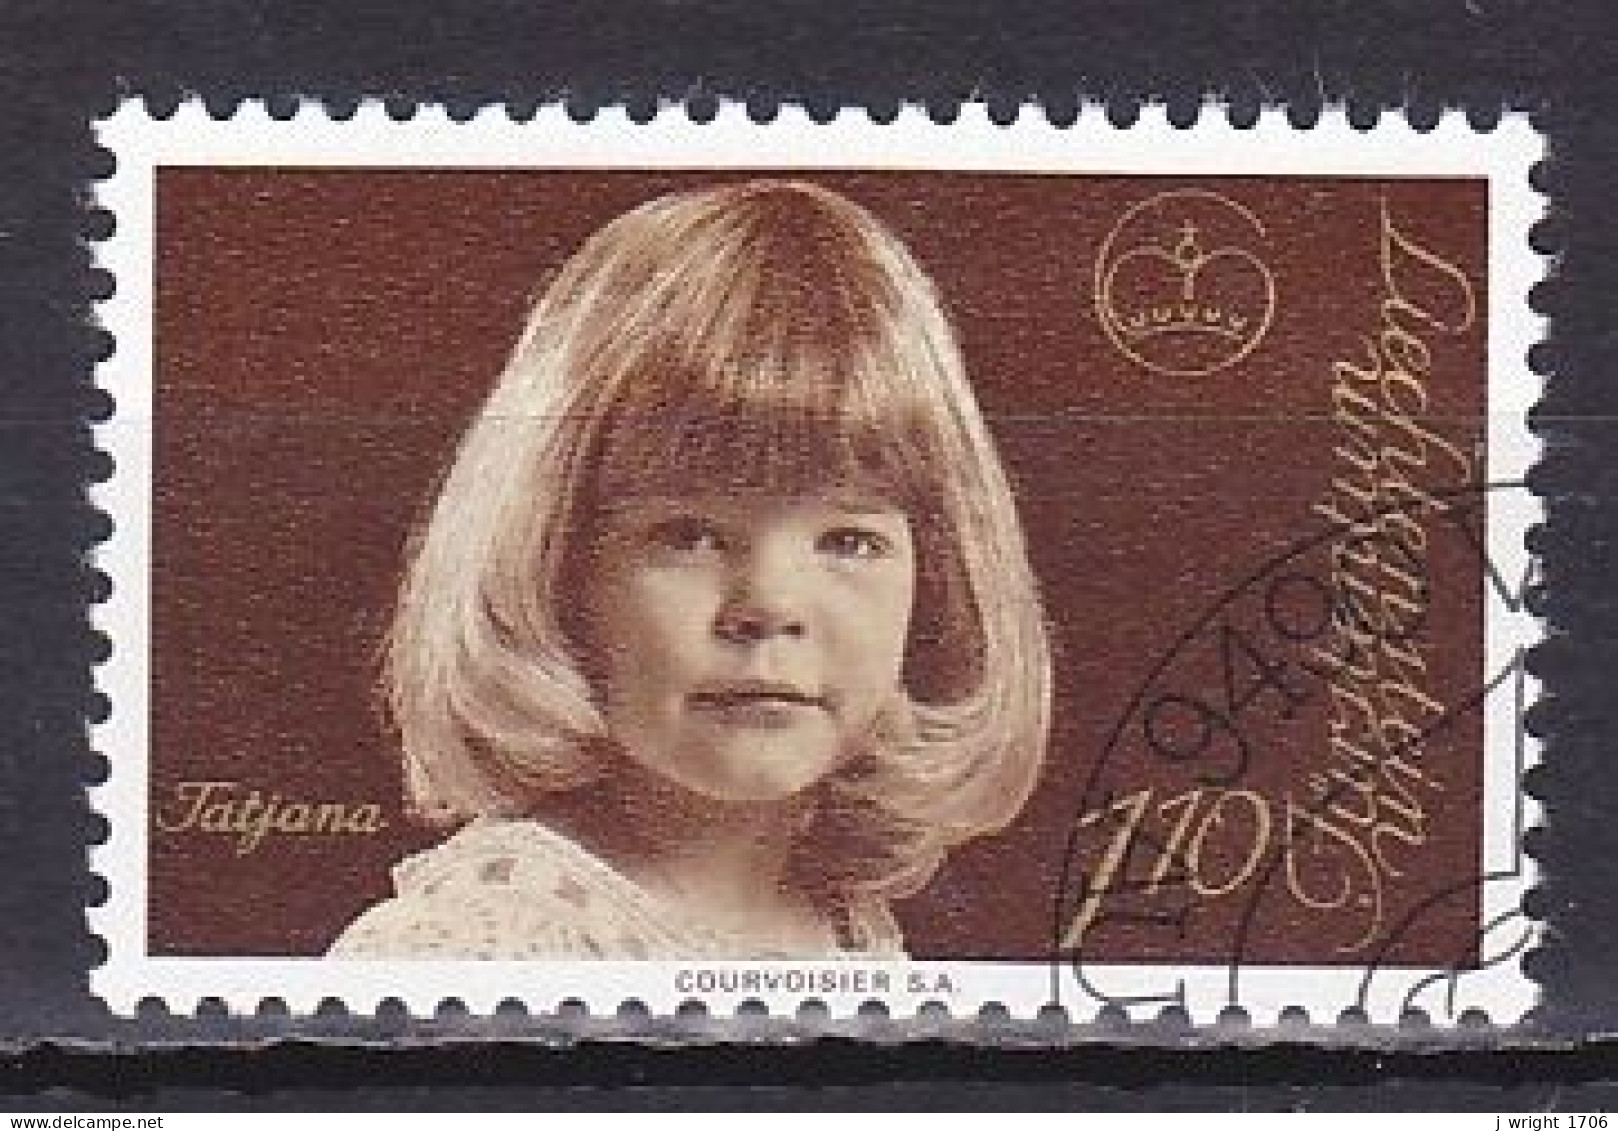 Liechtenstein, 1977, Princess Tatjana, 1.10Fr, CTO - Used Stamps